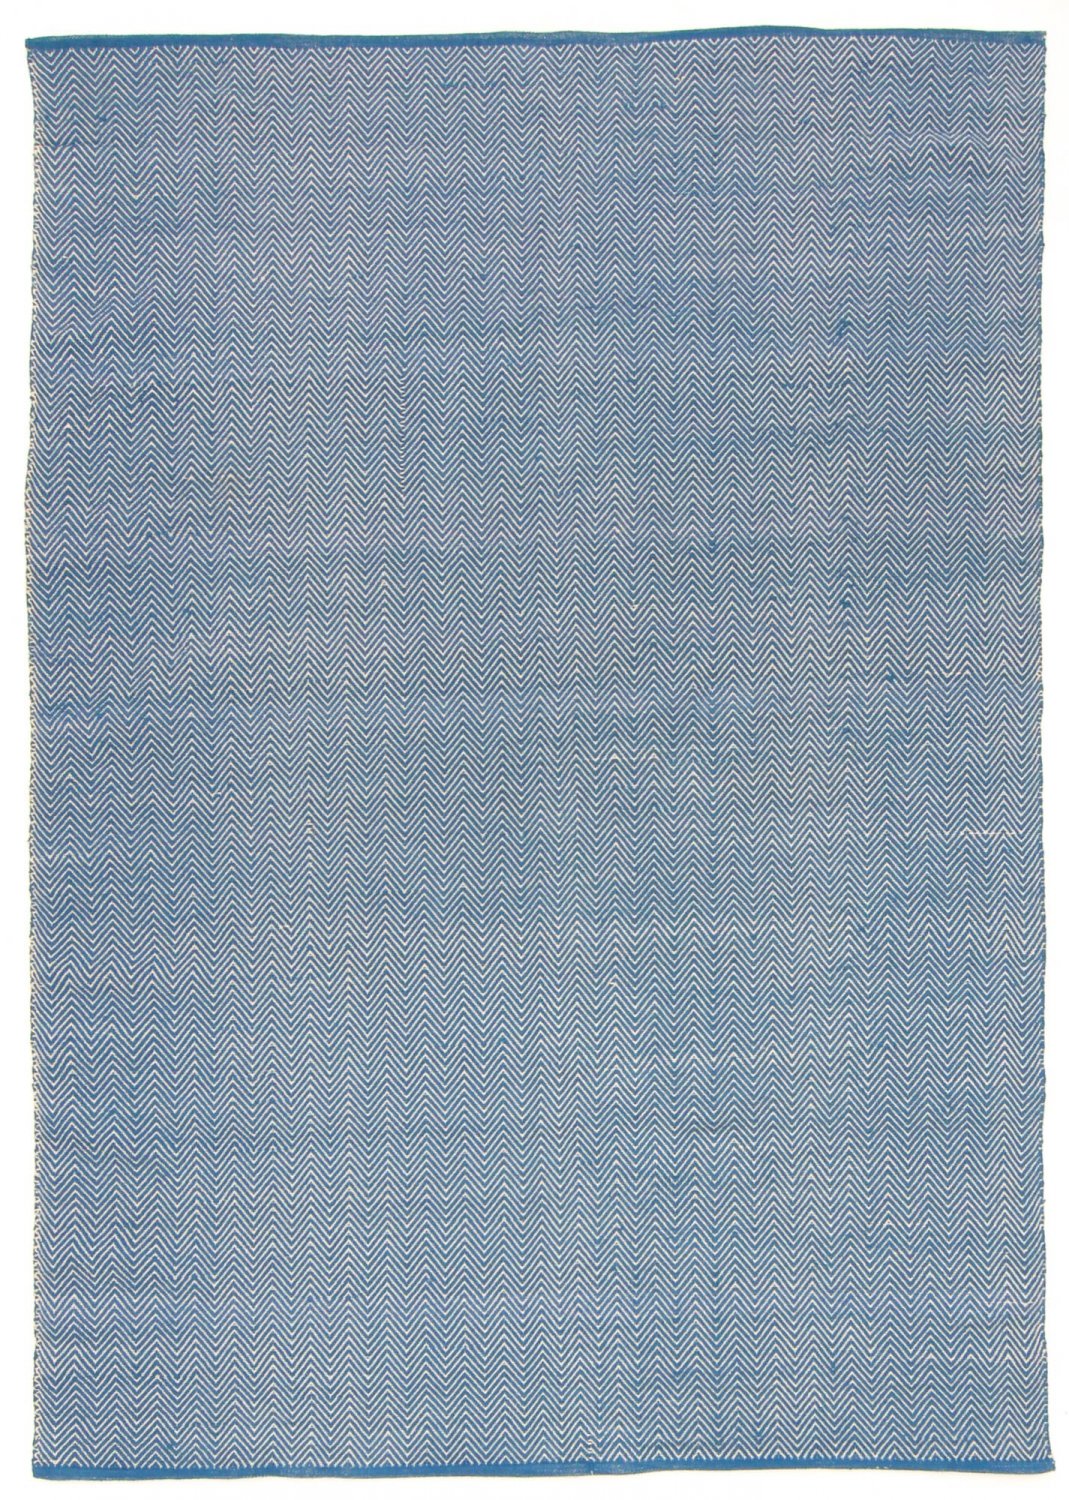 Flickenteppich - Marina (blau)